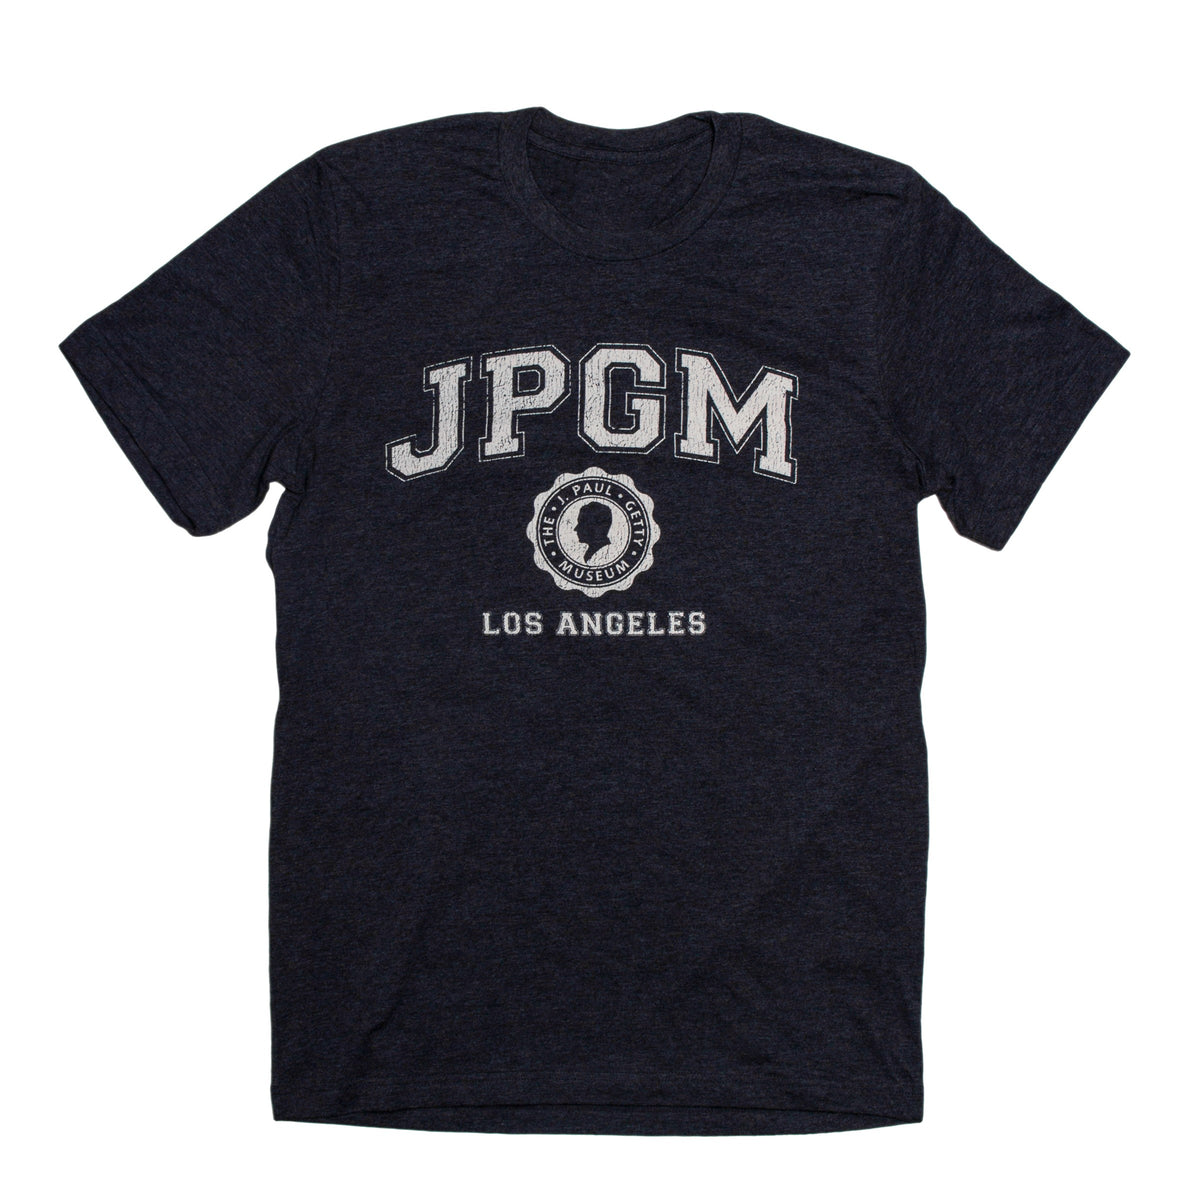 Getty Museum JPGM T-Shirt